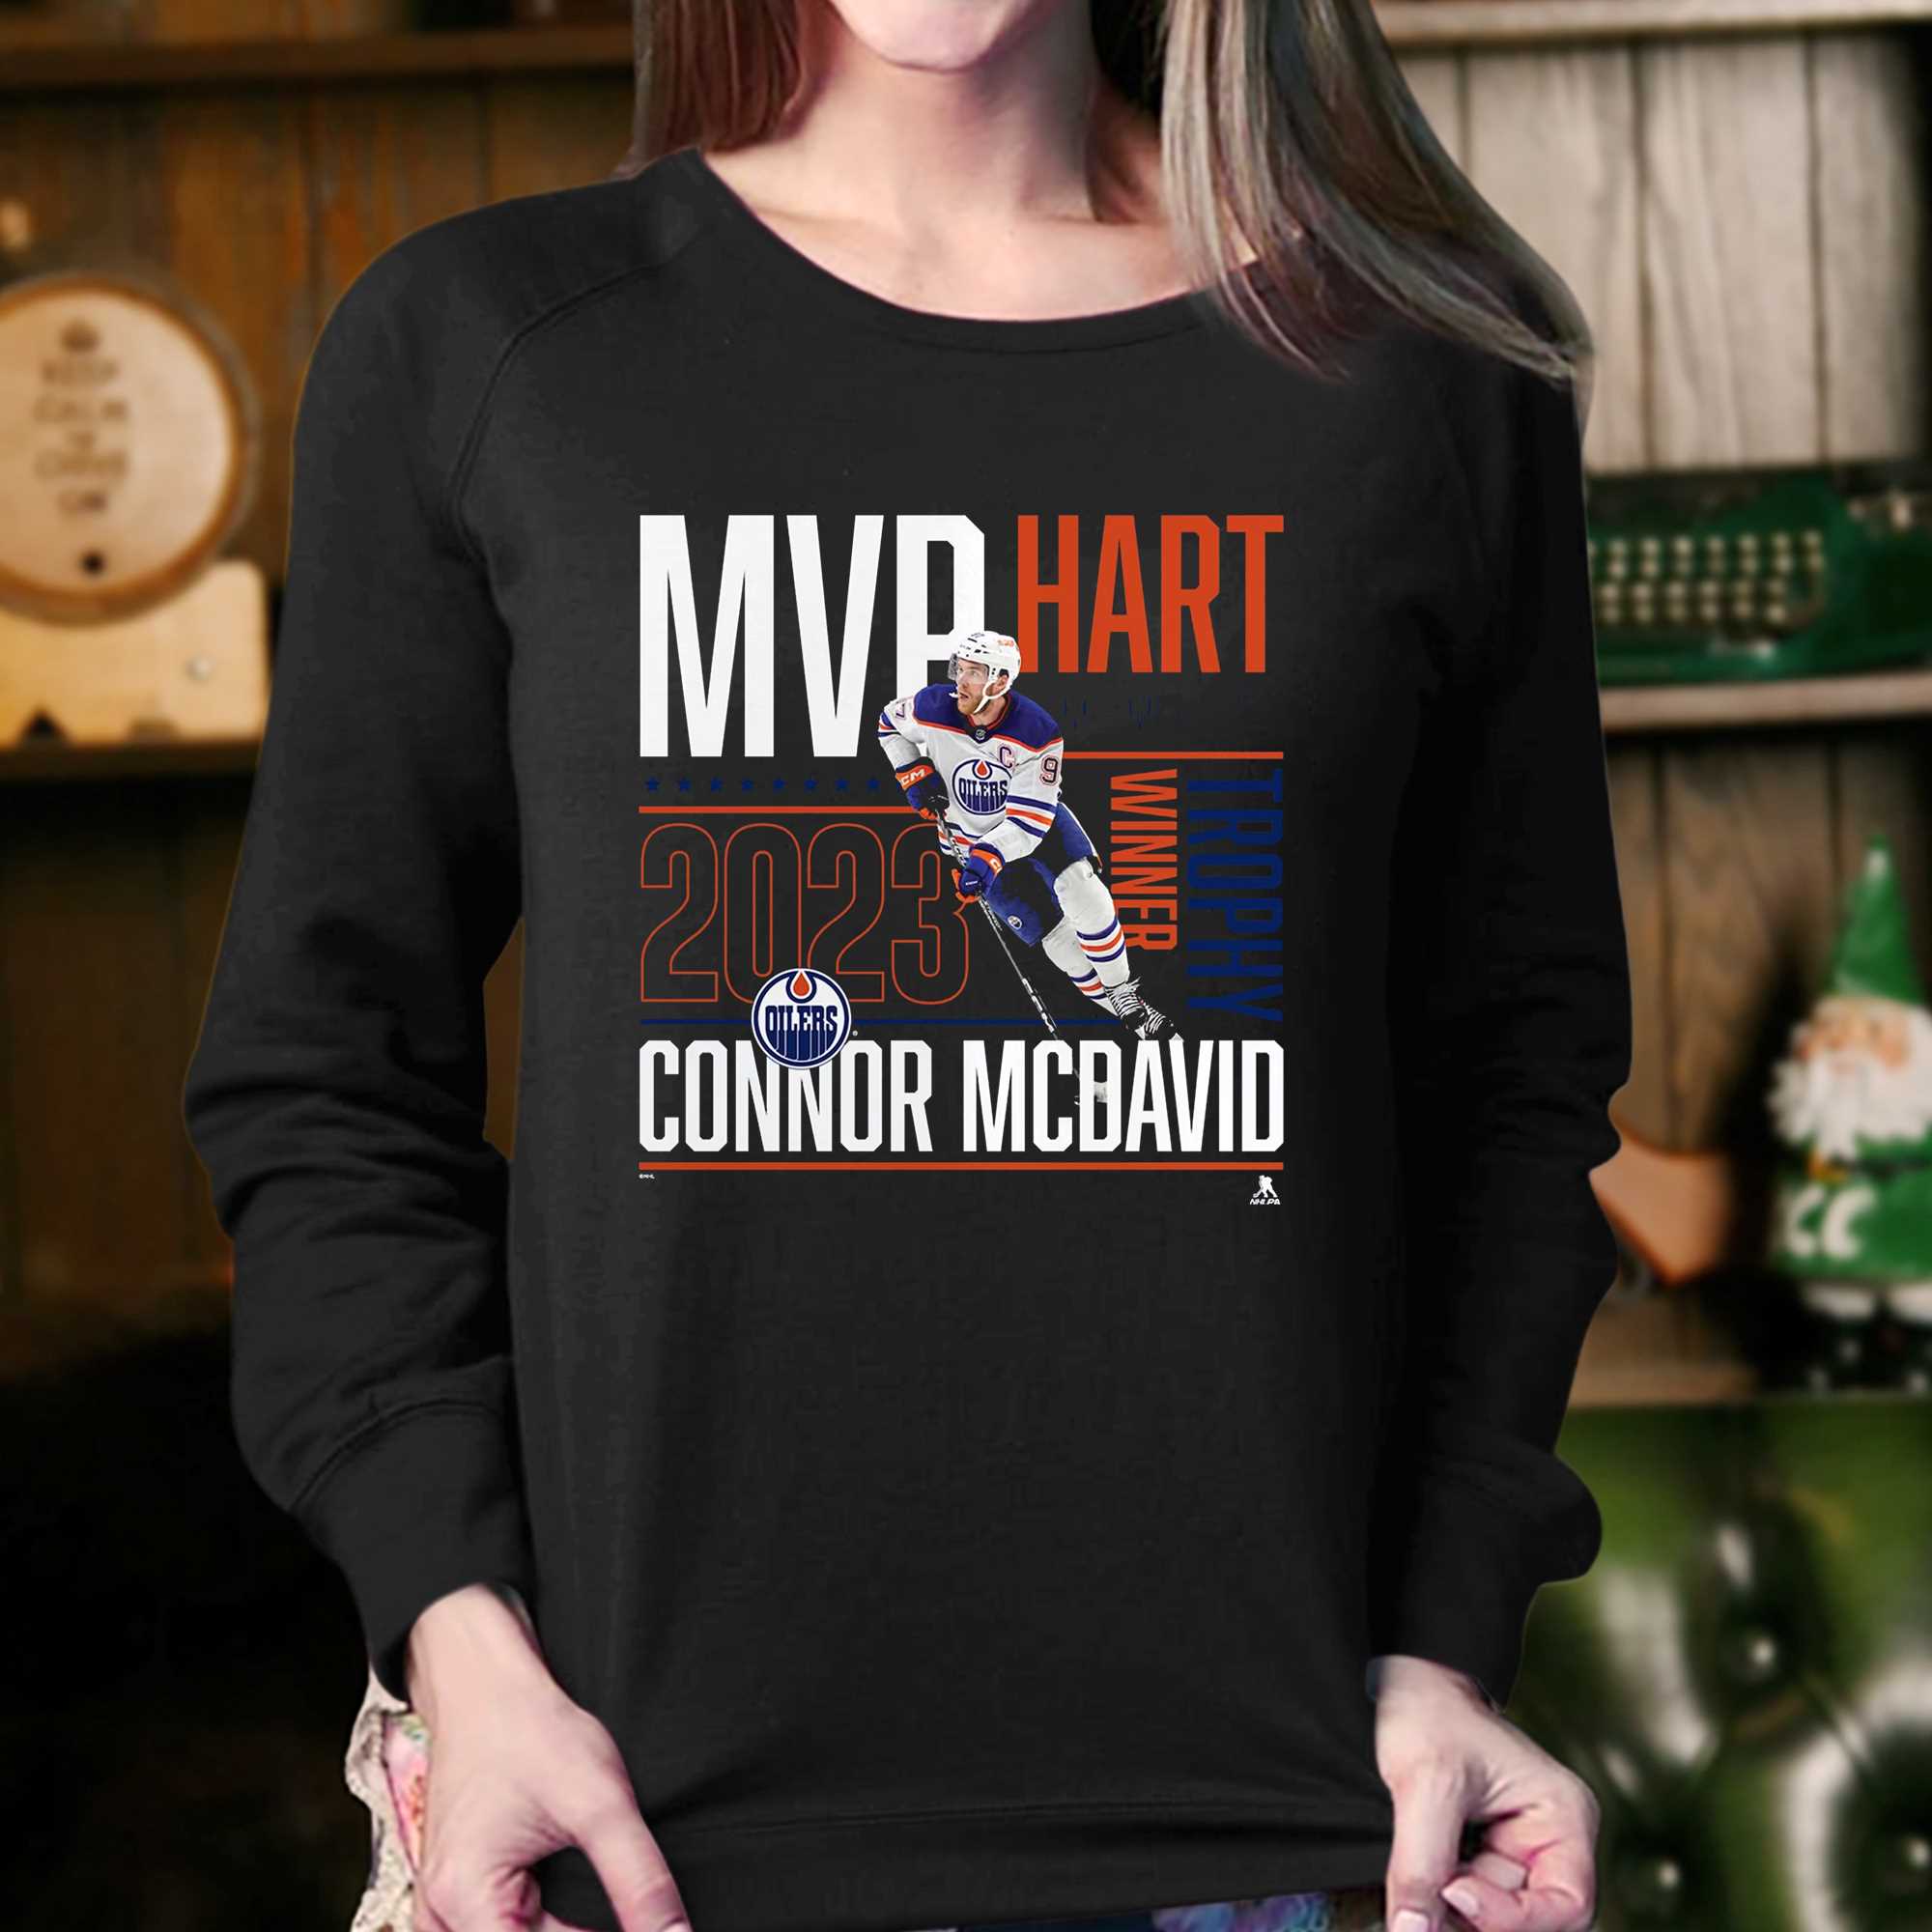 Connor McDavid Jerseys, Connor McDavid Shirts, Apparel, Gear